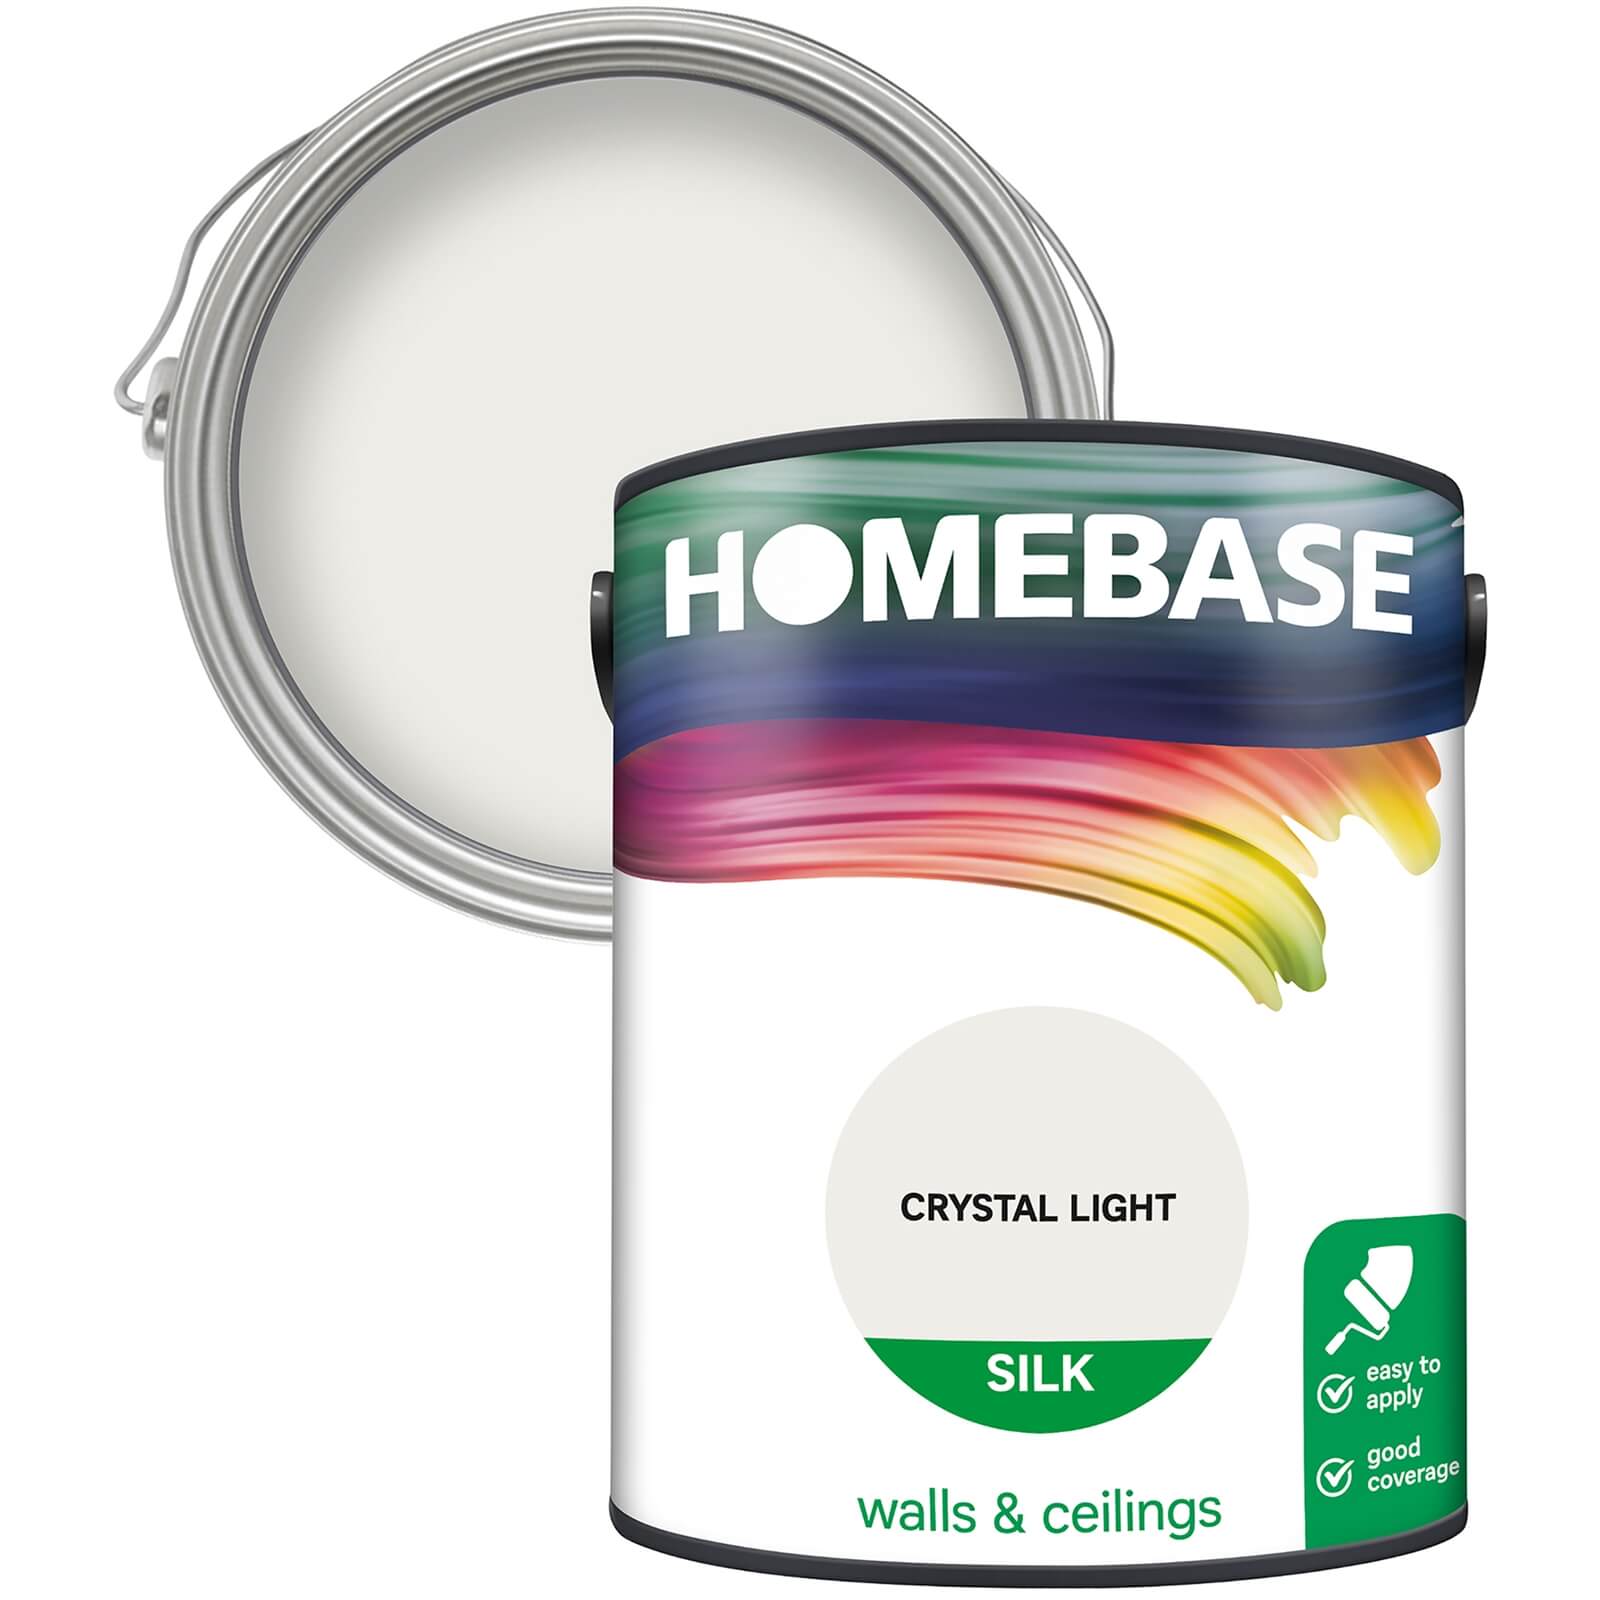 Homebase Silk Emulsion Paint Crystal Light - 5L